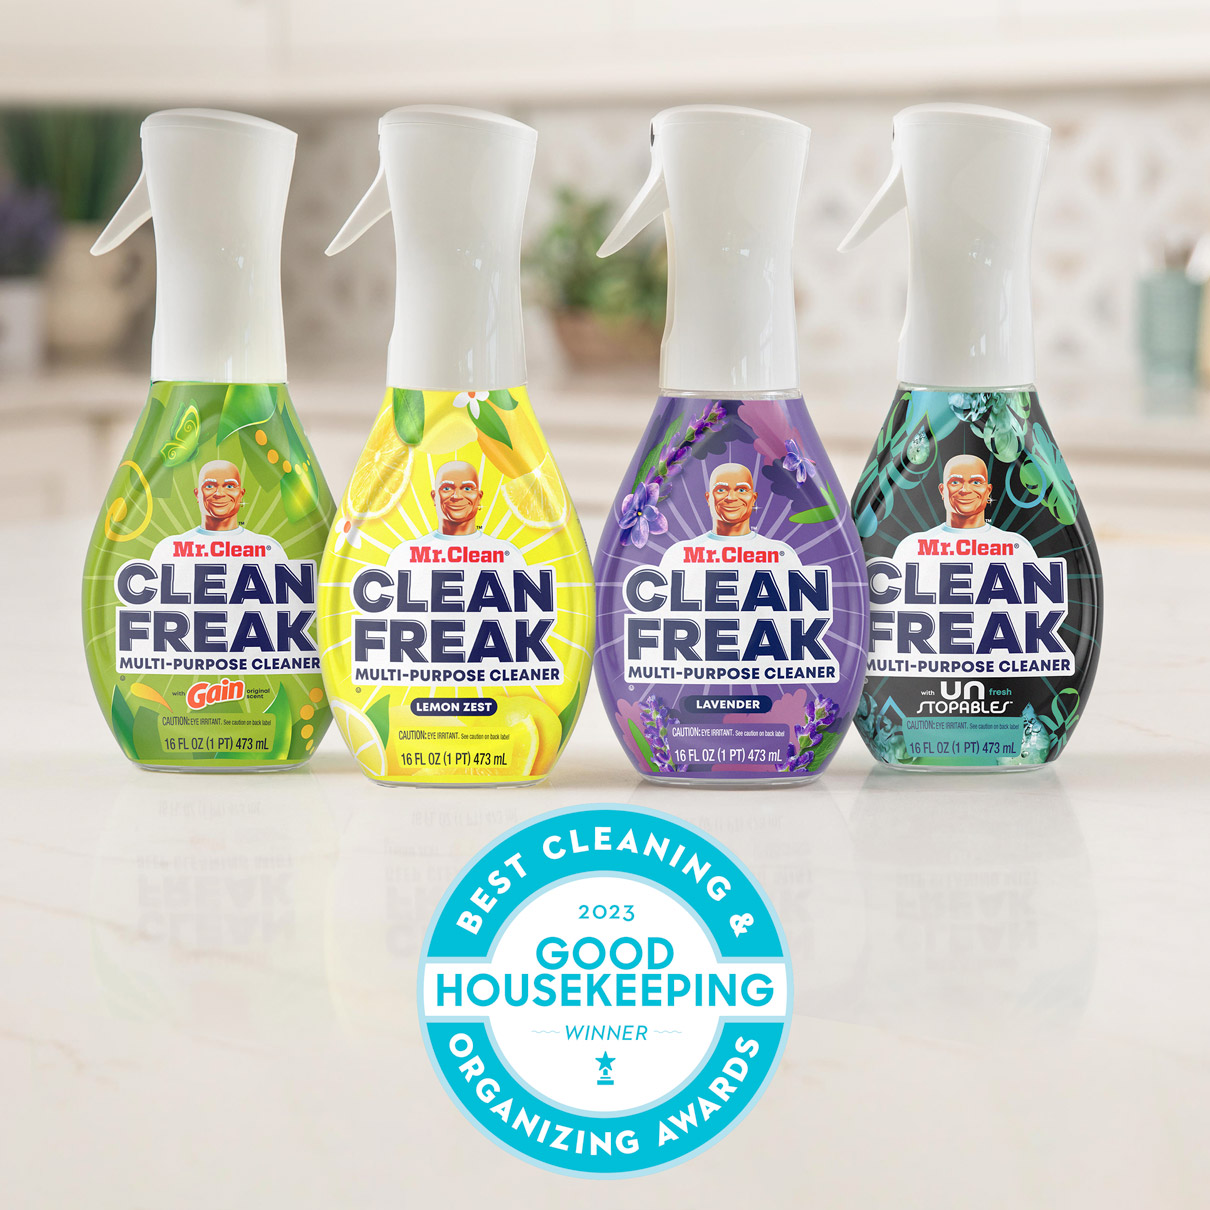 Mr. Clean Clean Freak Deep Cleaning Mist Lemon Zest Refill - 16 oz btl